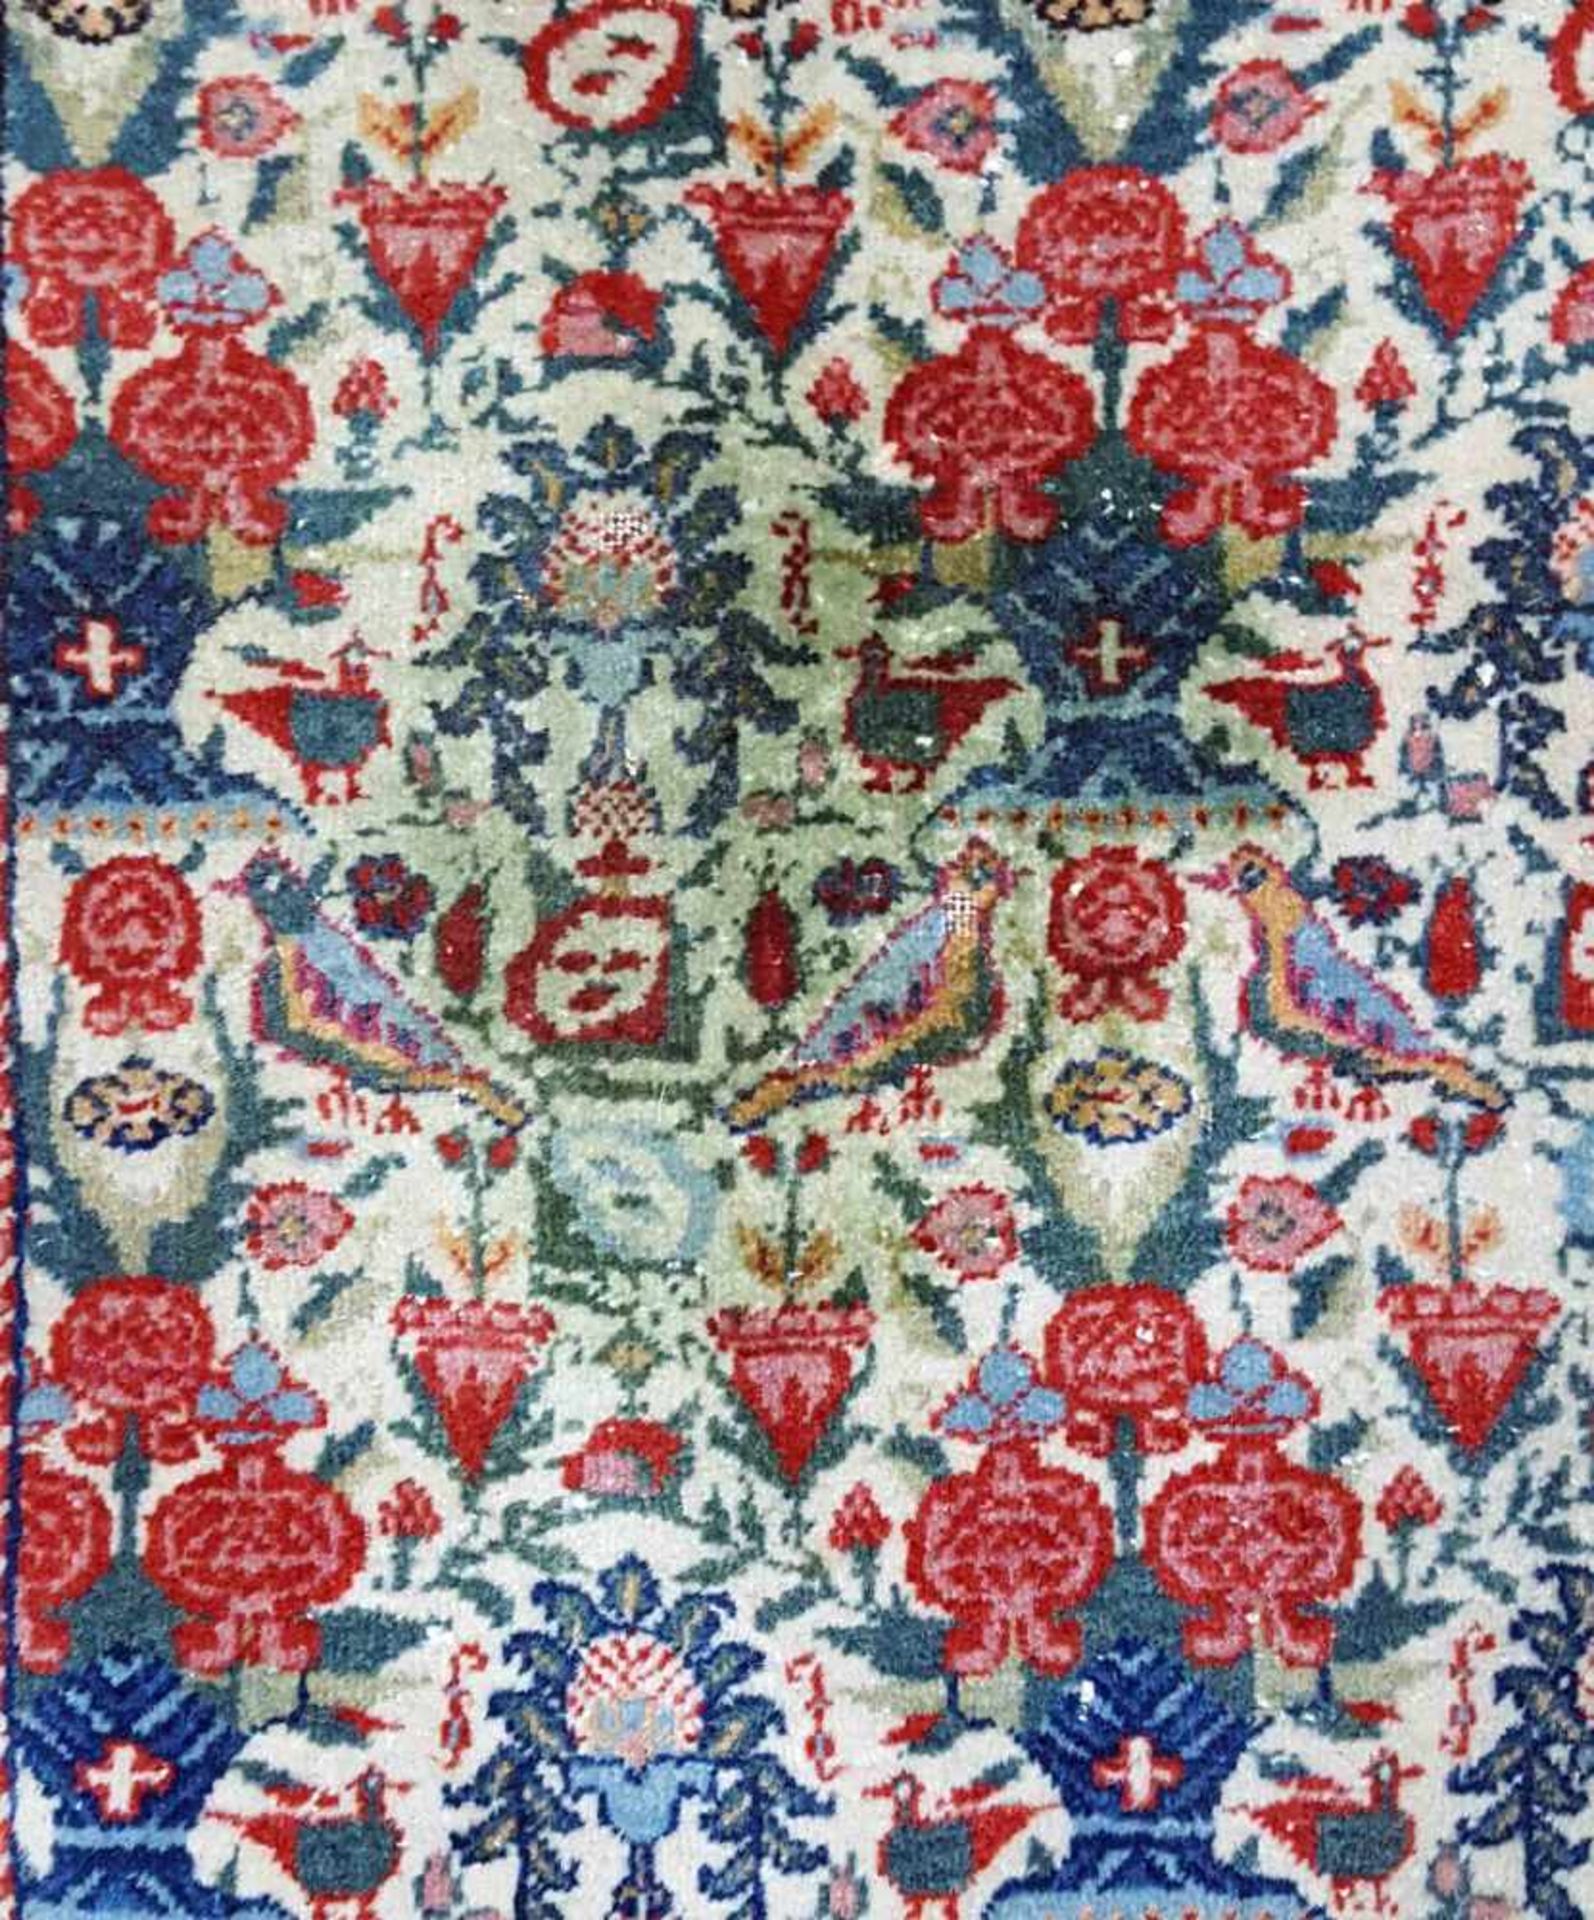 Tehran Persian carpet. "Zili - Sultani" pattern. Iran. Antique. Around 1900. - Image 6 of 7